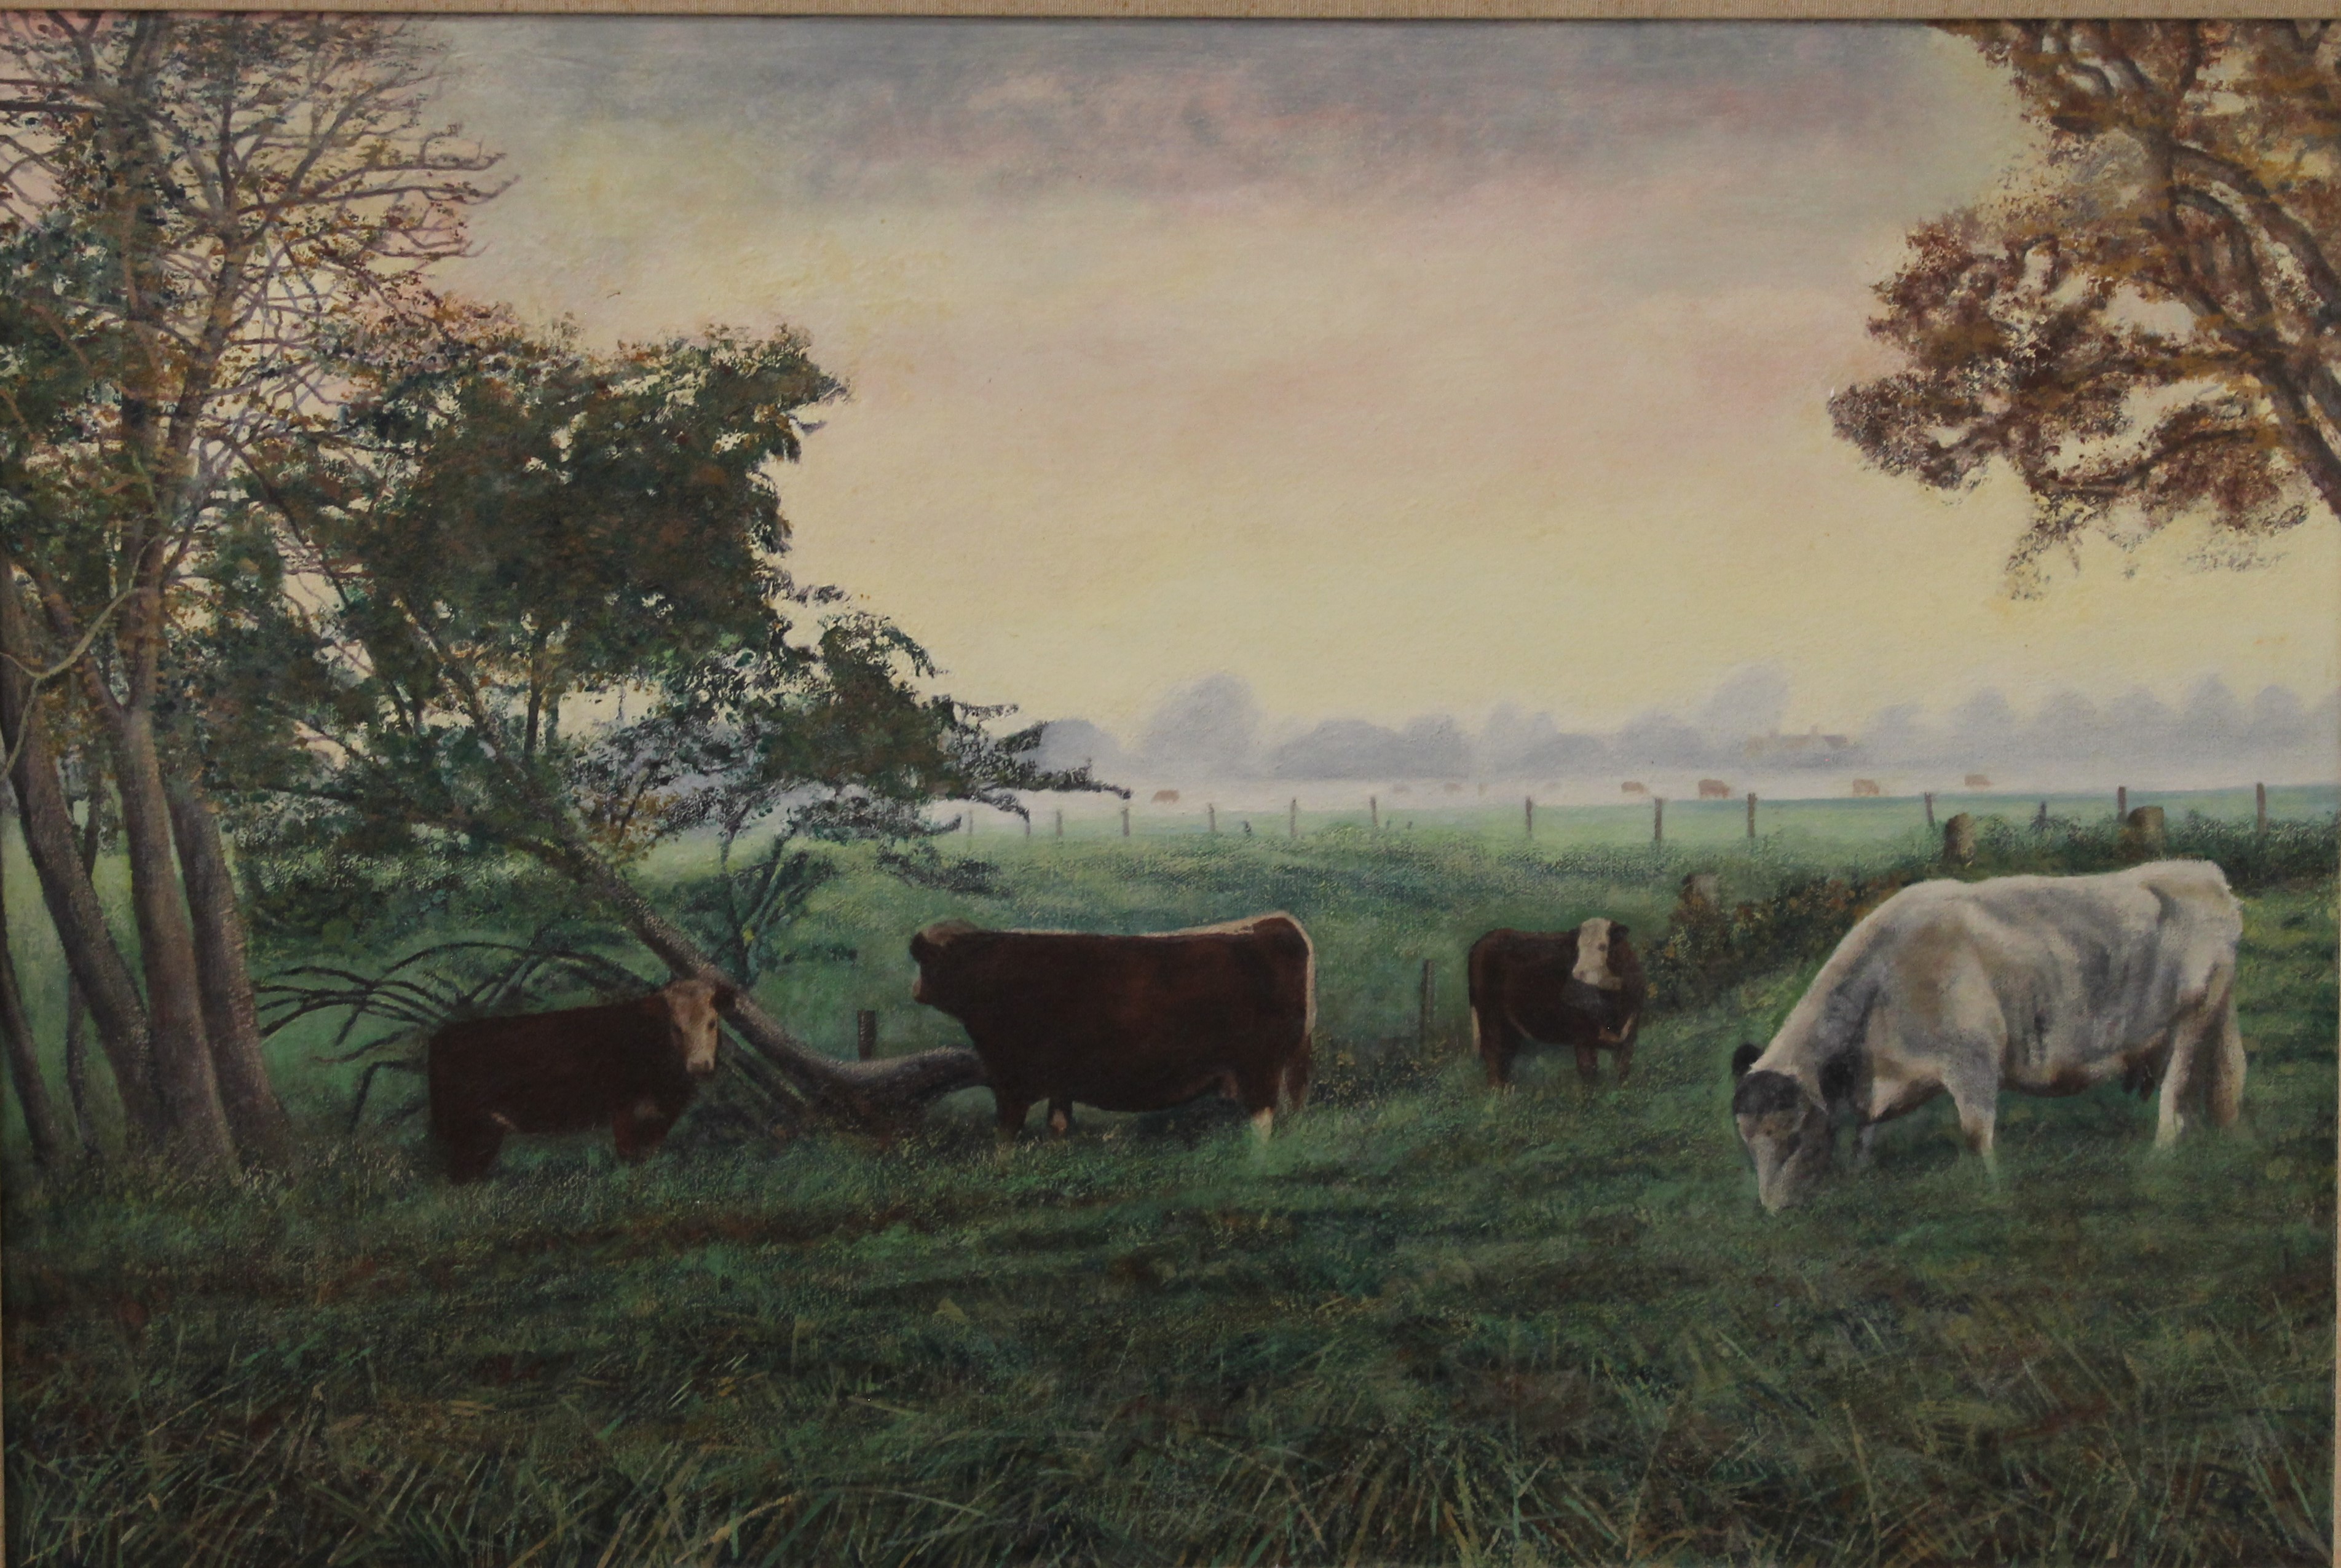 LINDA RAMSAY (20th/21st Century) British (AR), Meadows in Brampton, oil on canvas,